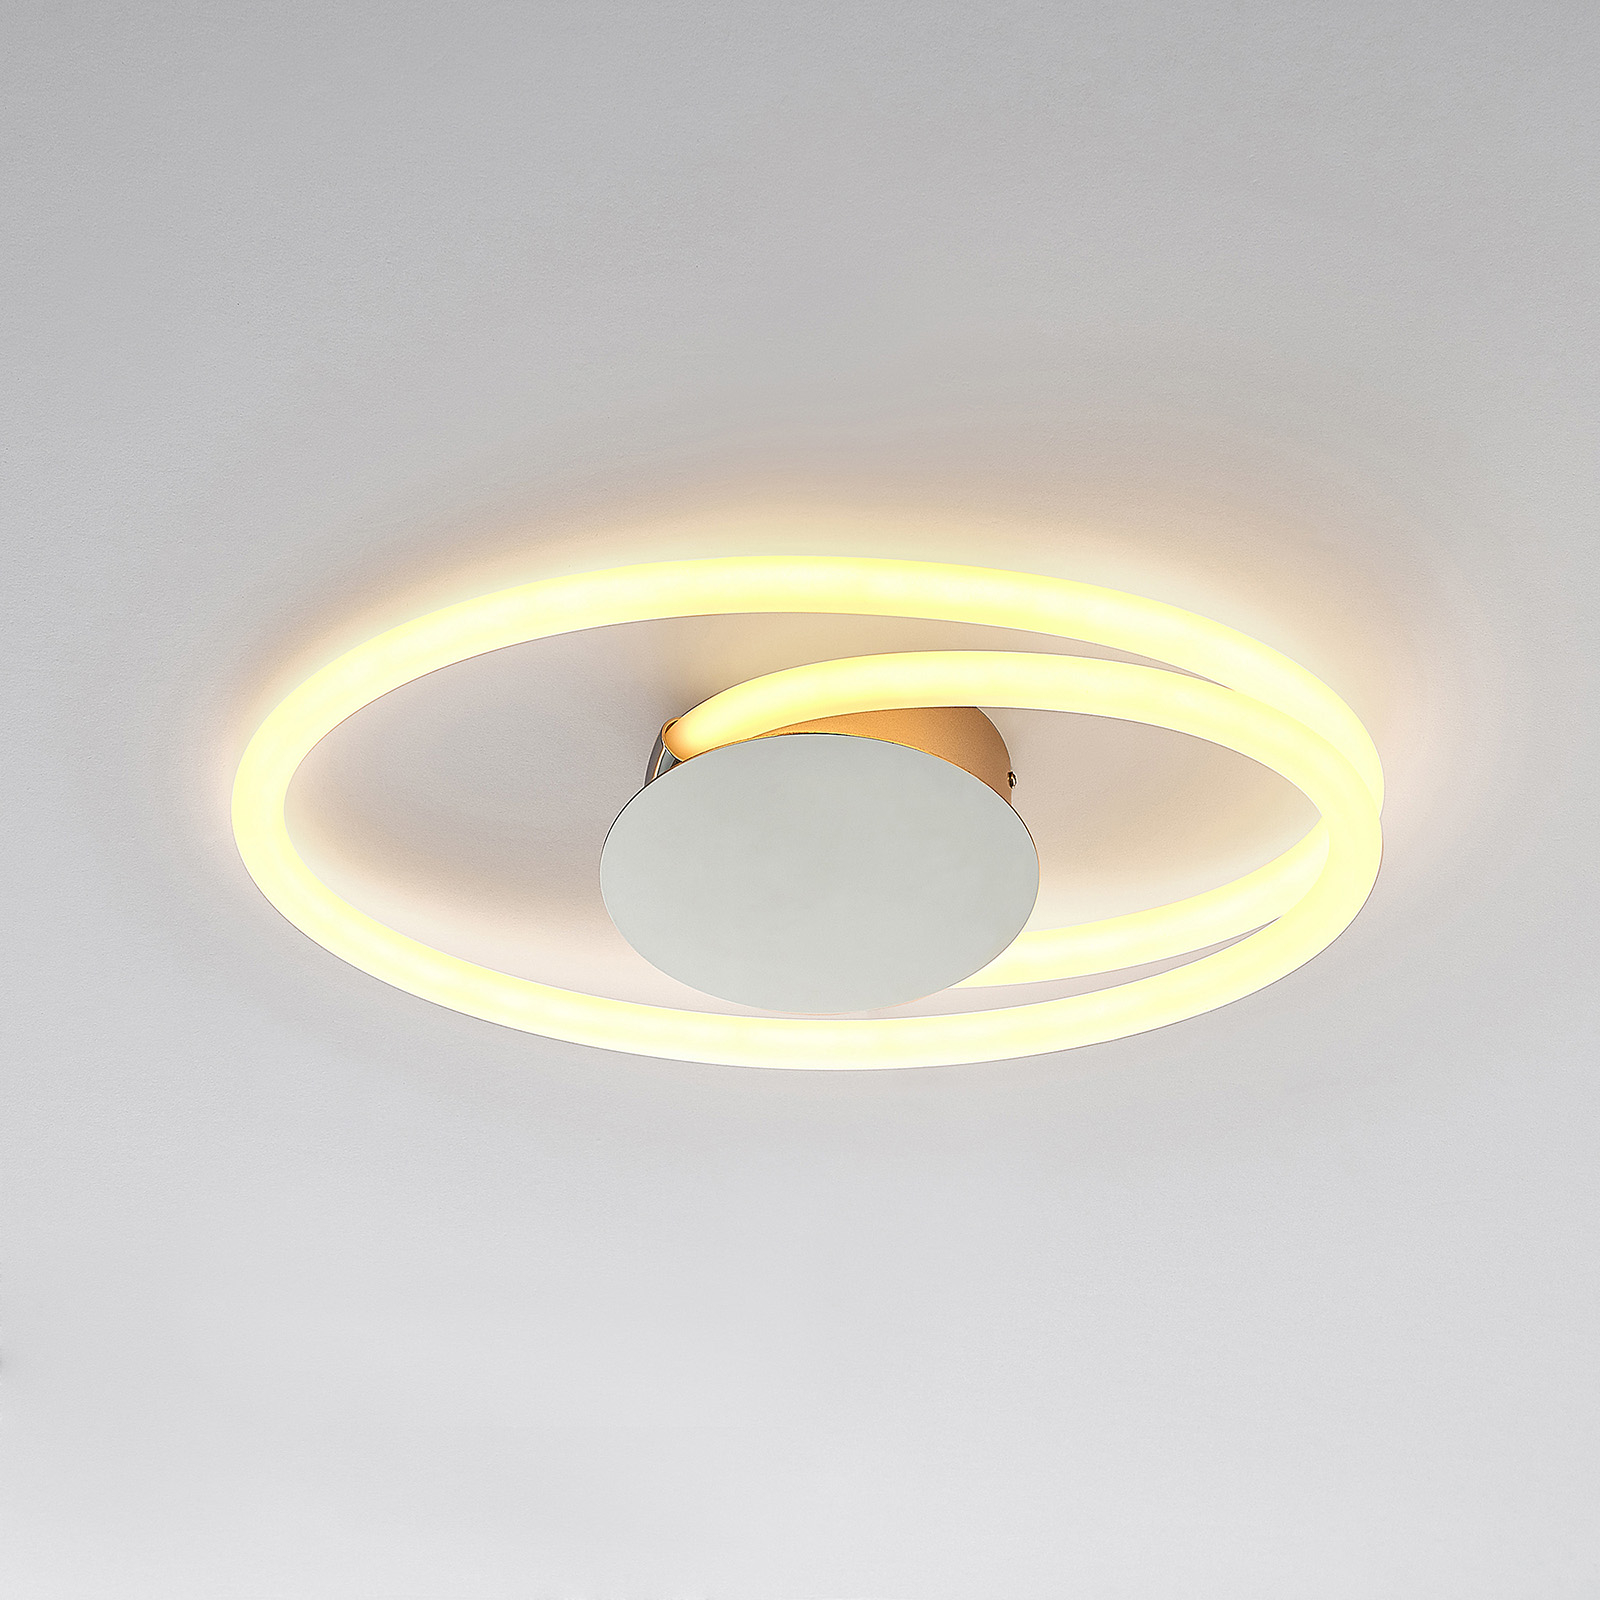 Lucande Ovala plafoniera LED, 53 cm